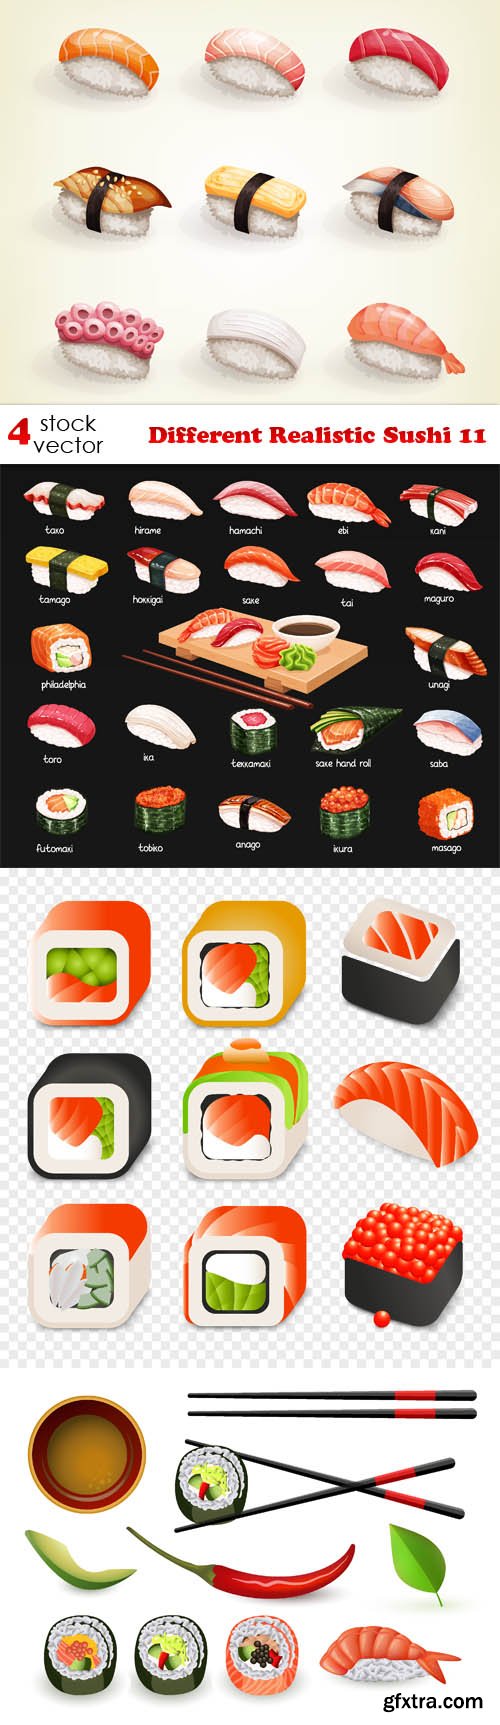 Vectors - Different Realistic Sushi 11